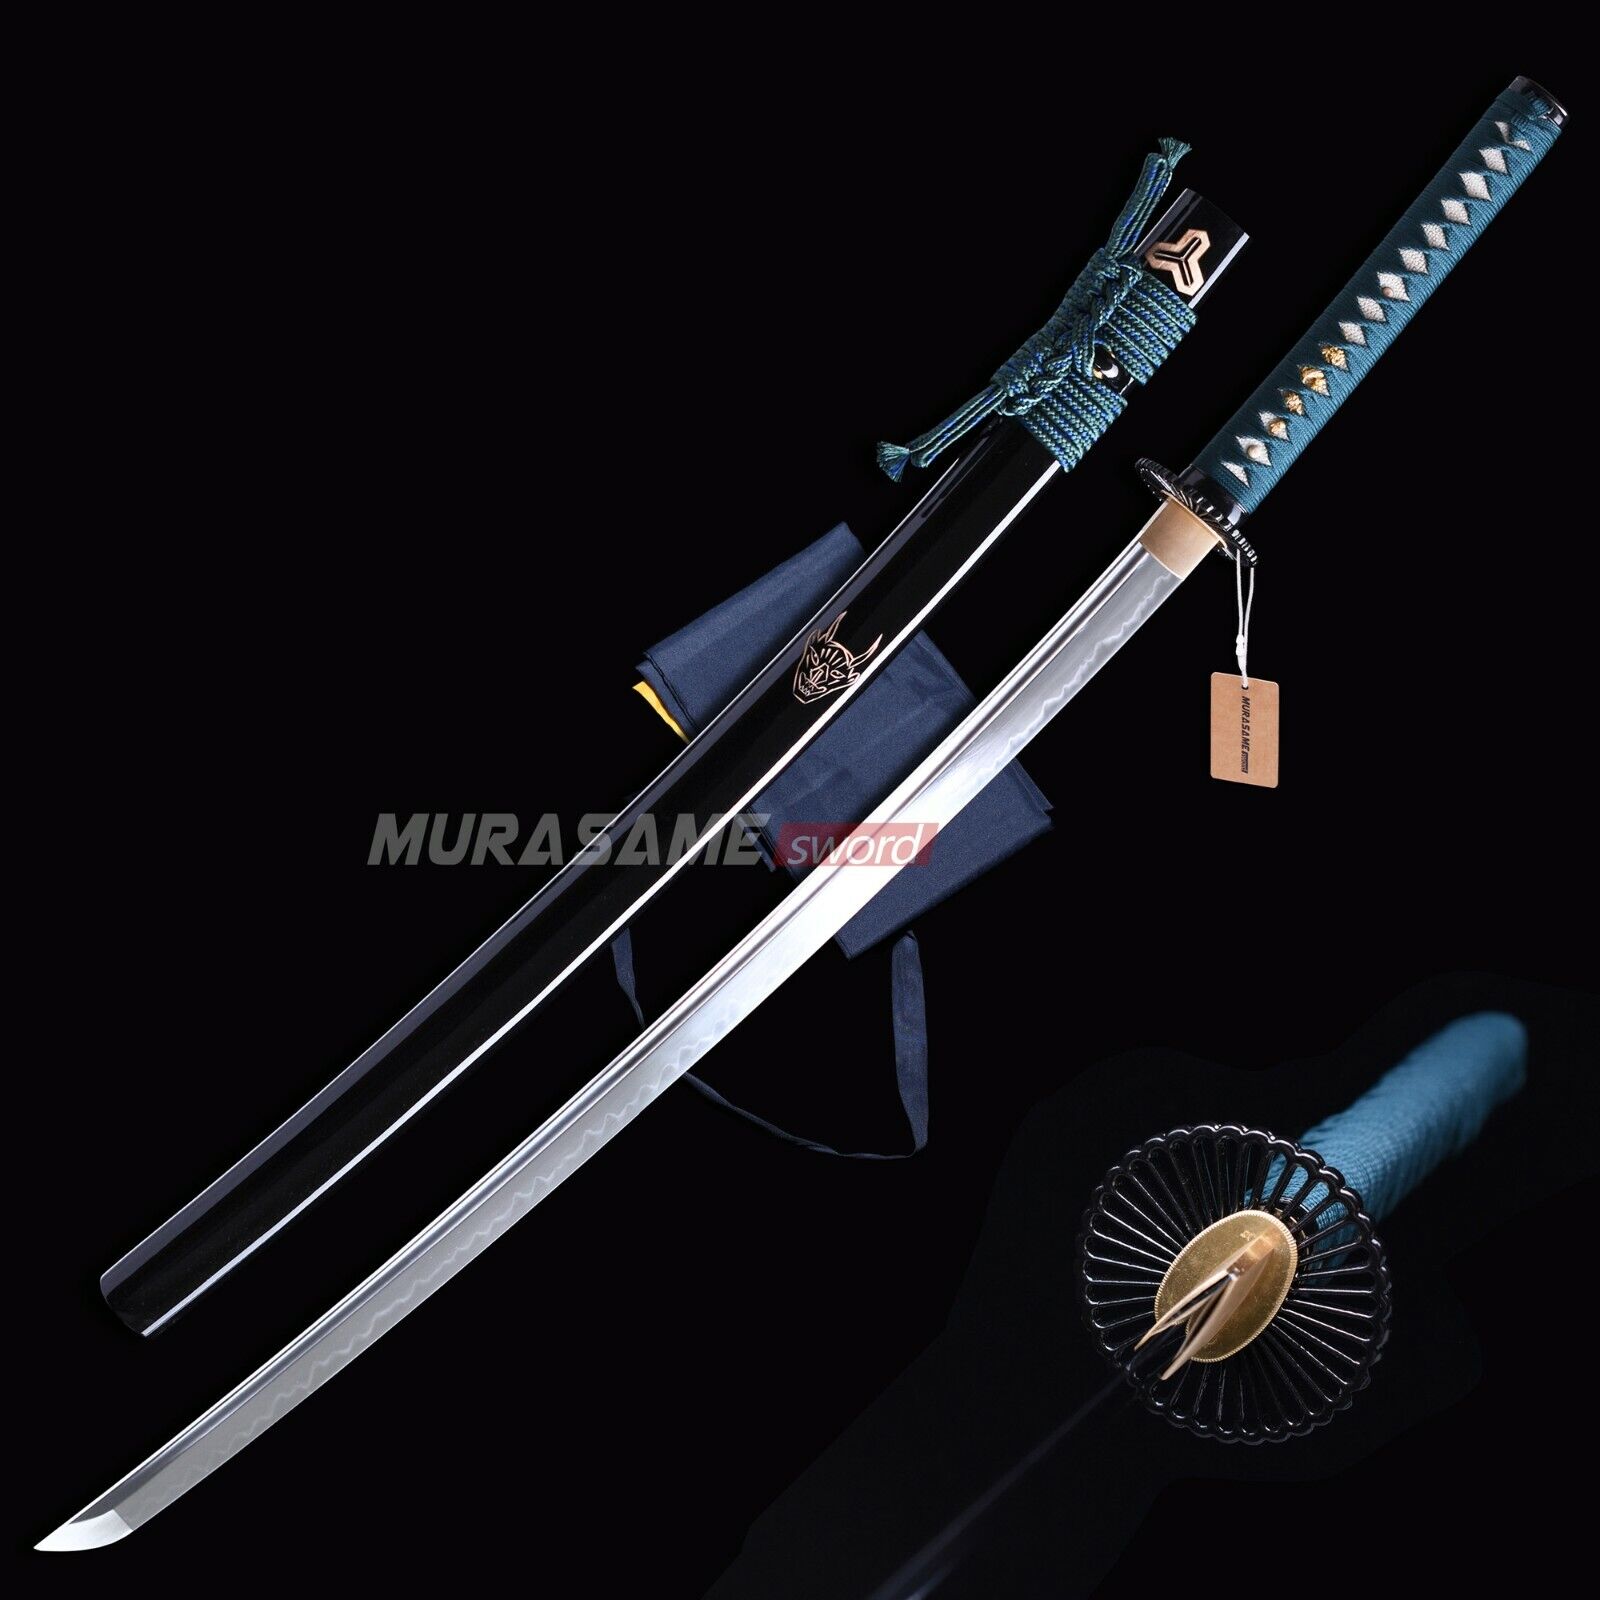 MURASAME Katana Sword Real Clay Tempered T10 Steel Nice Hamon Razor Sharp